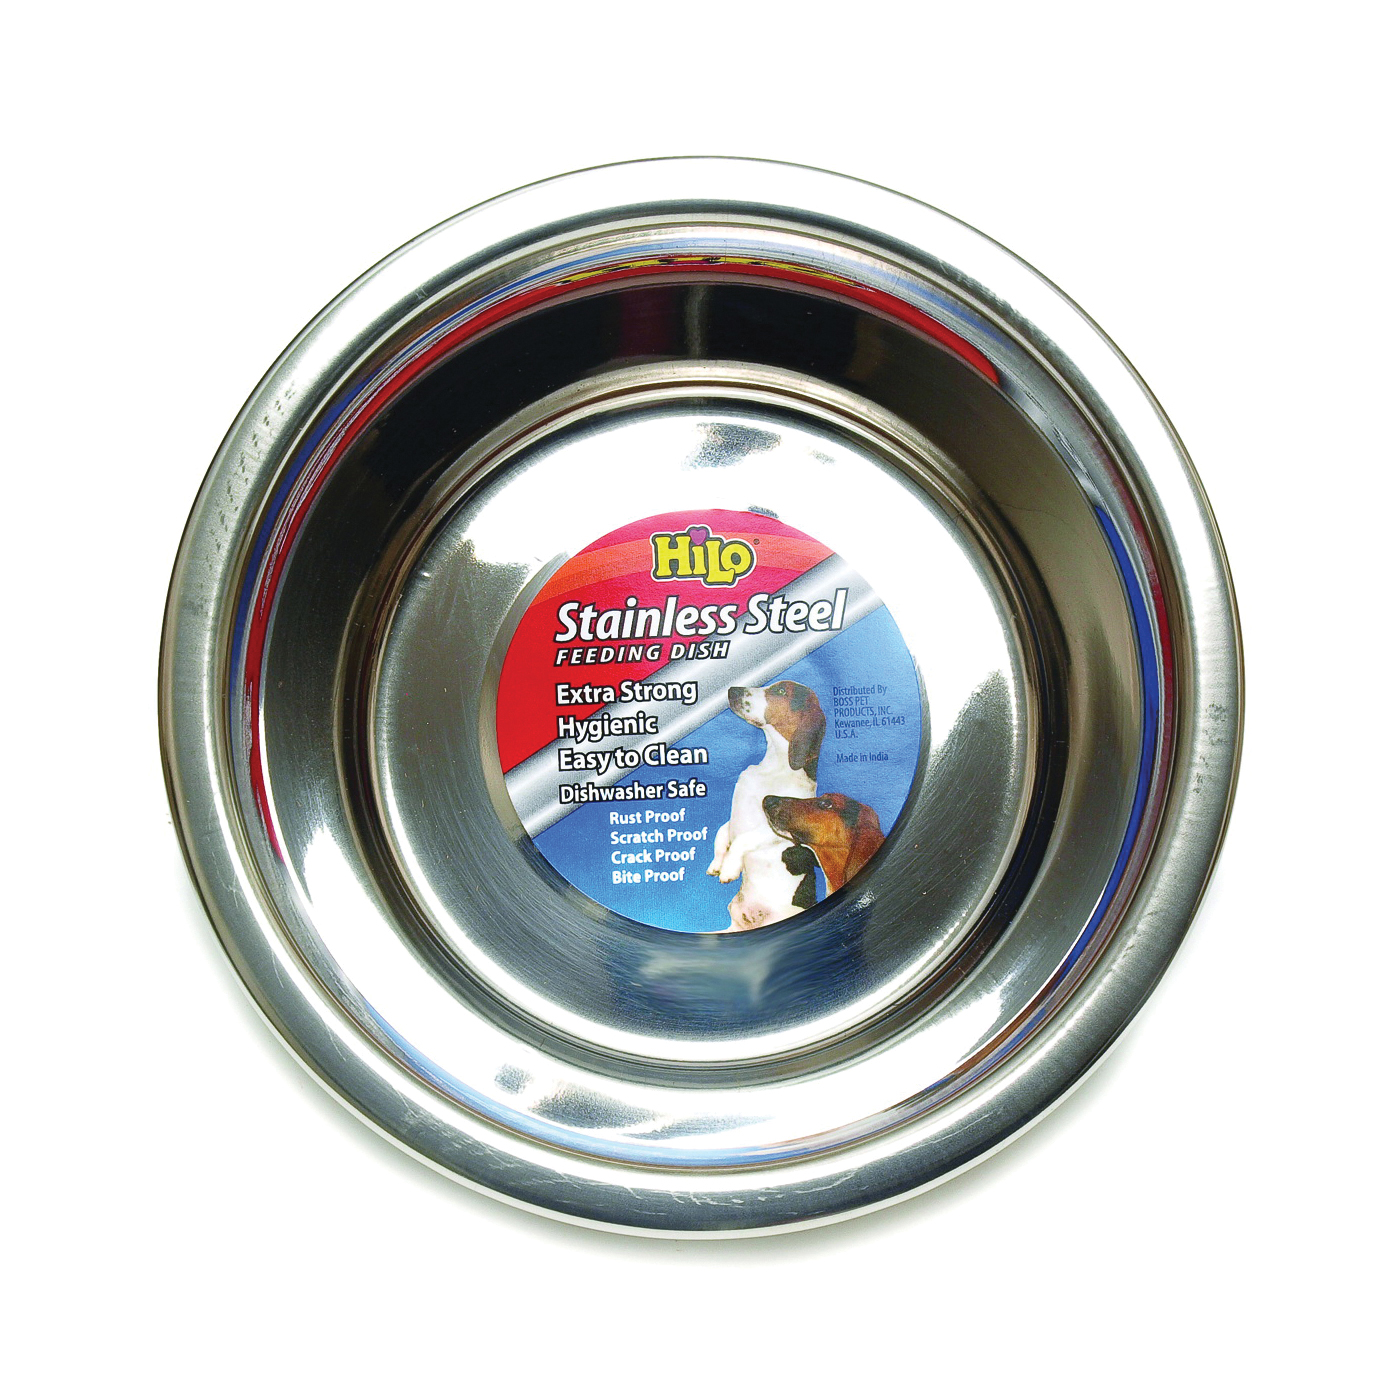 56670 Pet Feeding Dish, 5 qt Volume, Stainless Steel